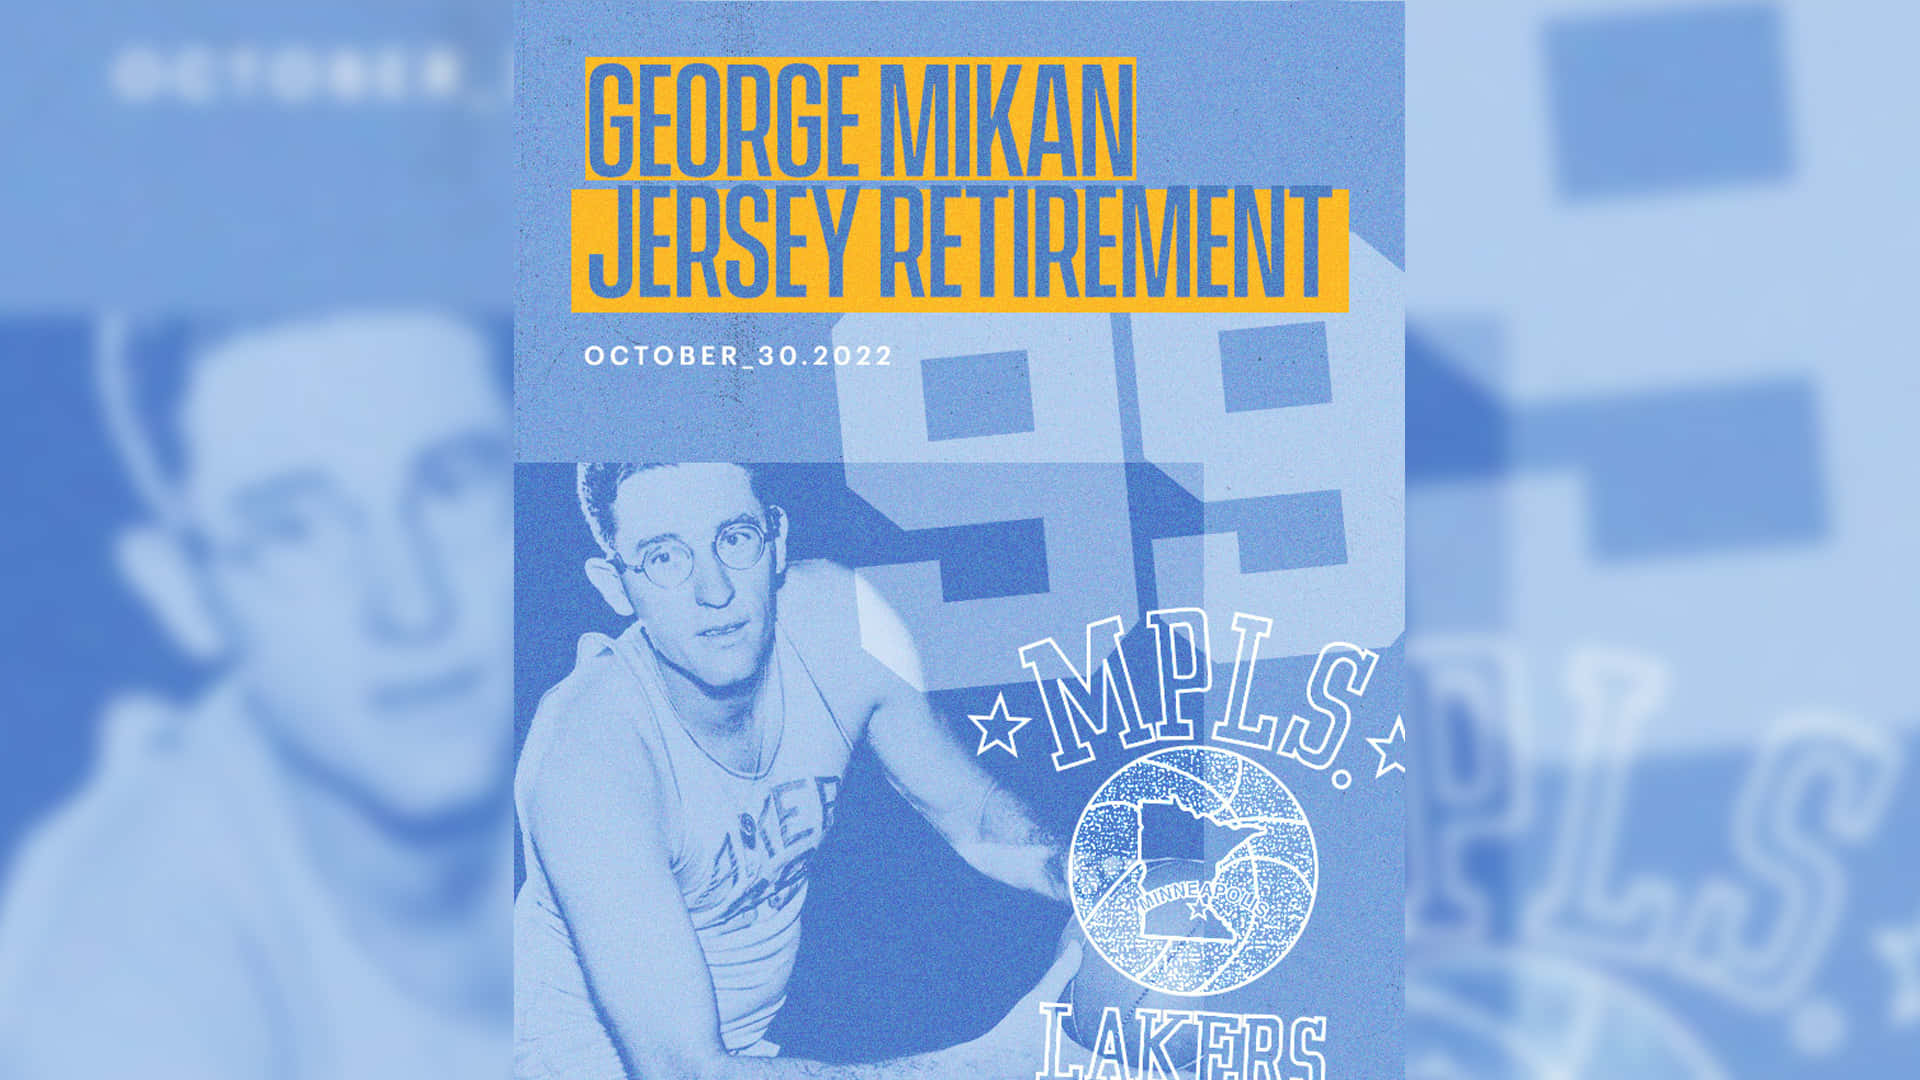 George Mikan Jersey Retirement Announcement Wallpaper